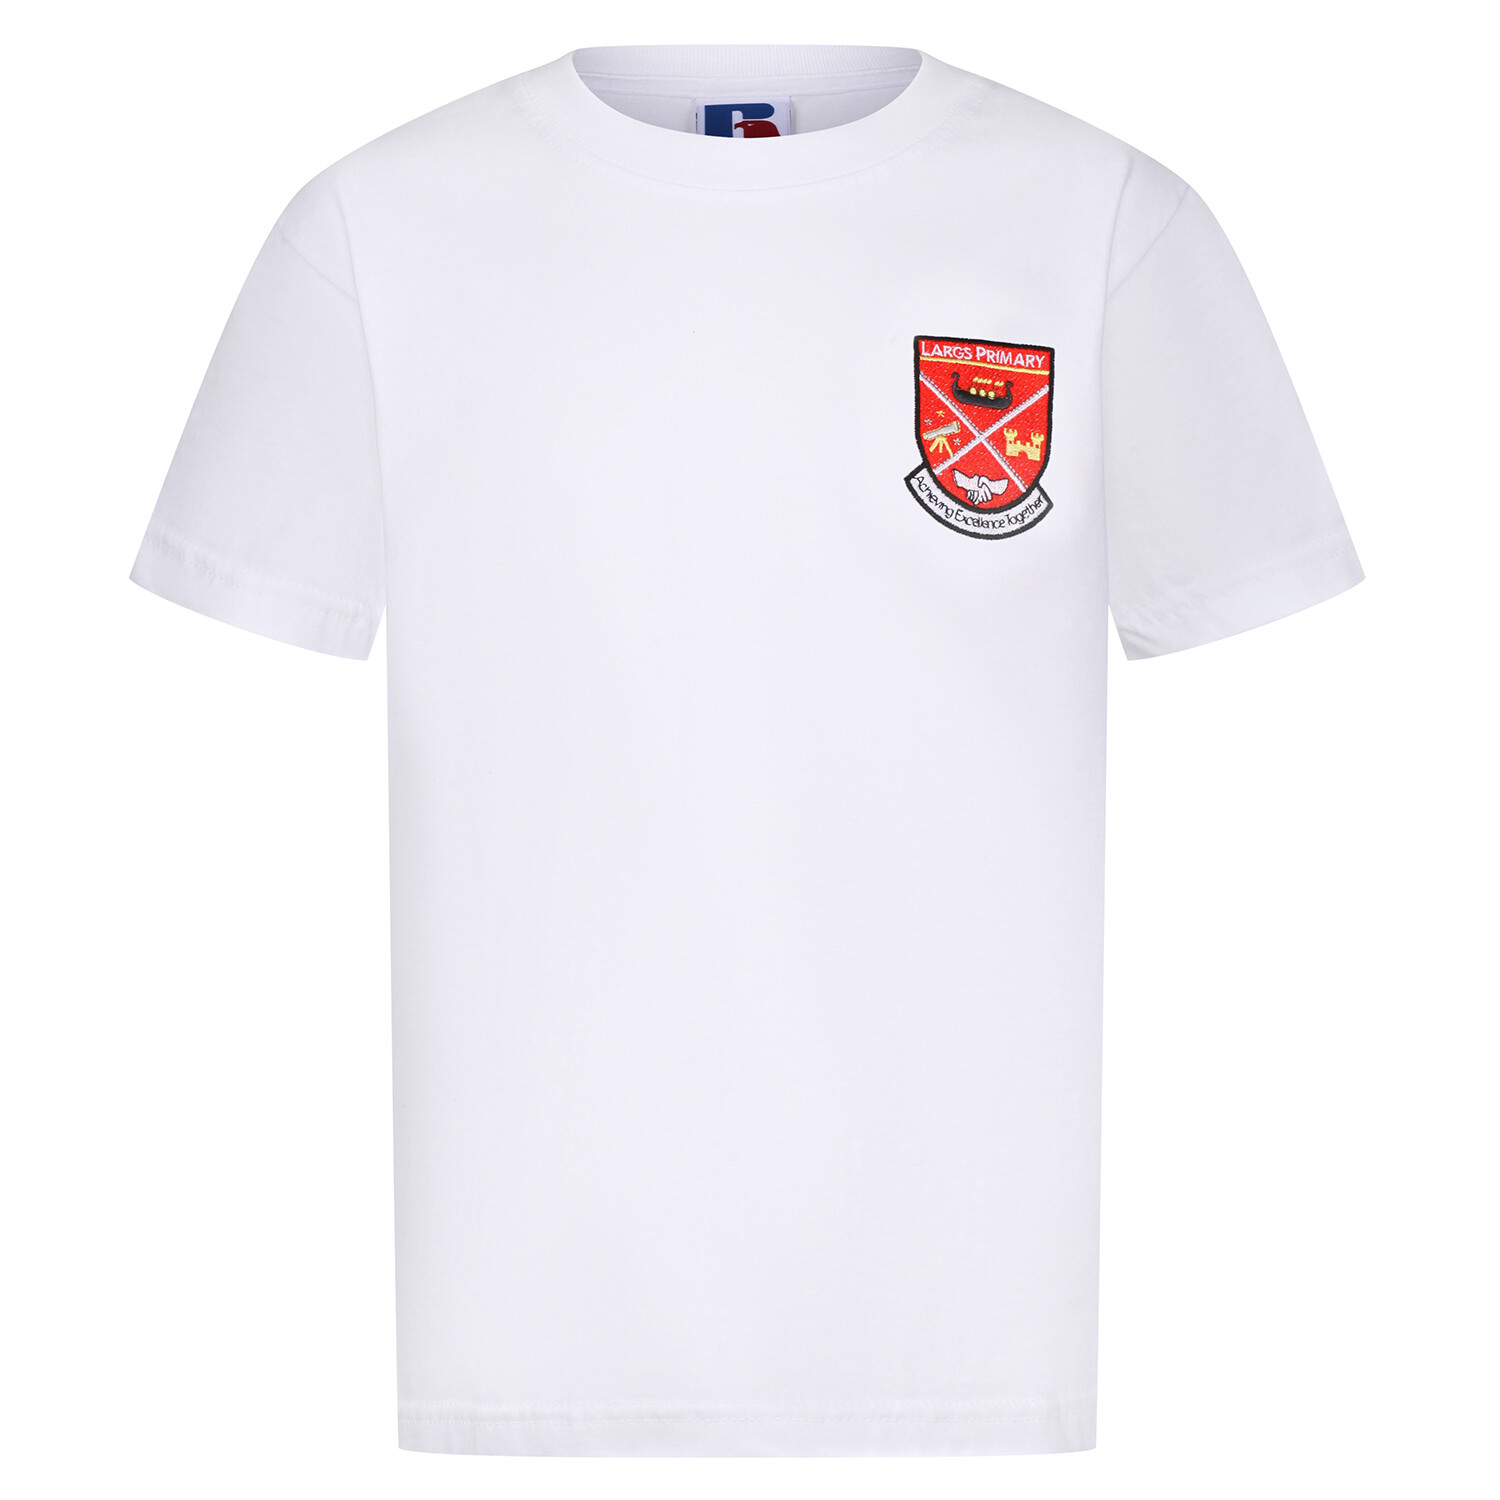 Largs Primary PE T-Shirt